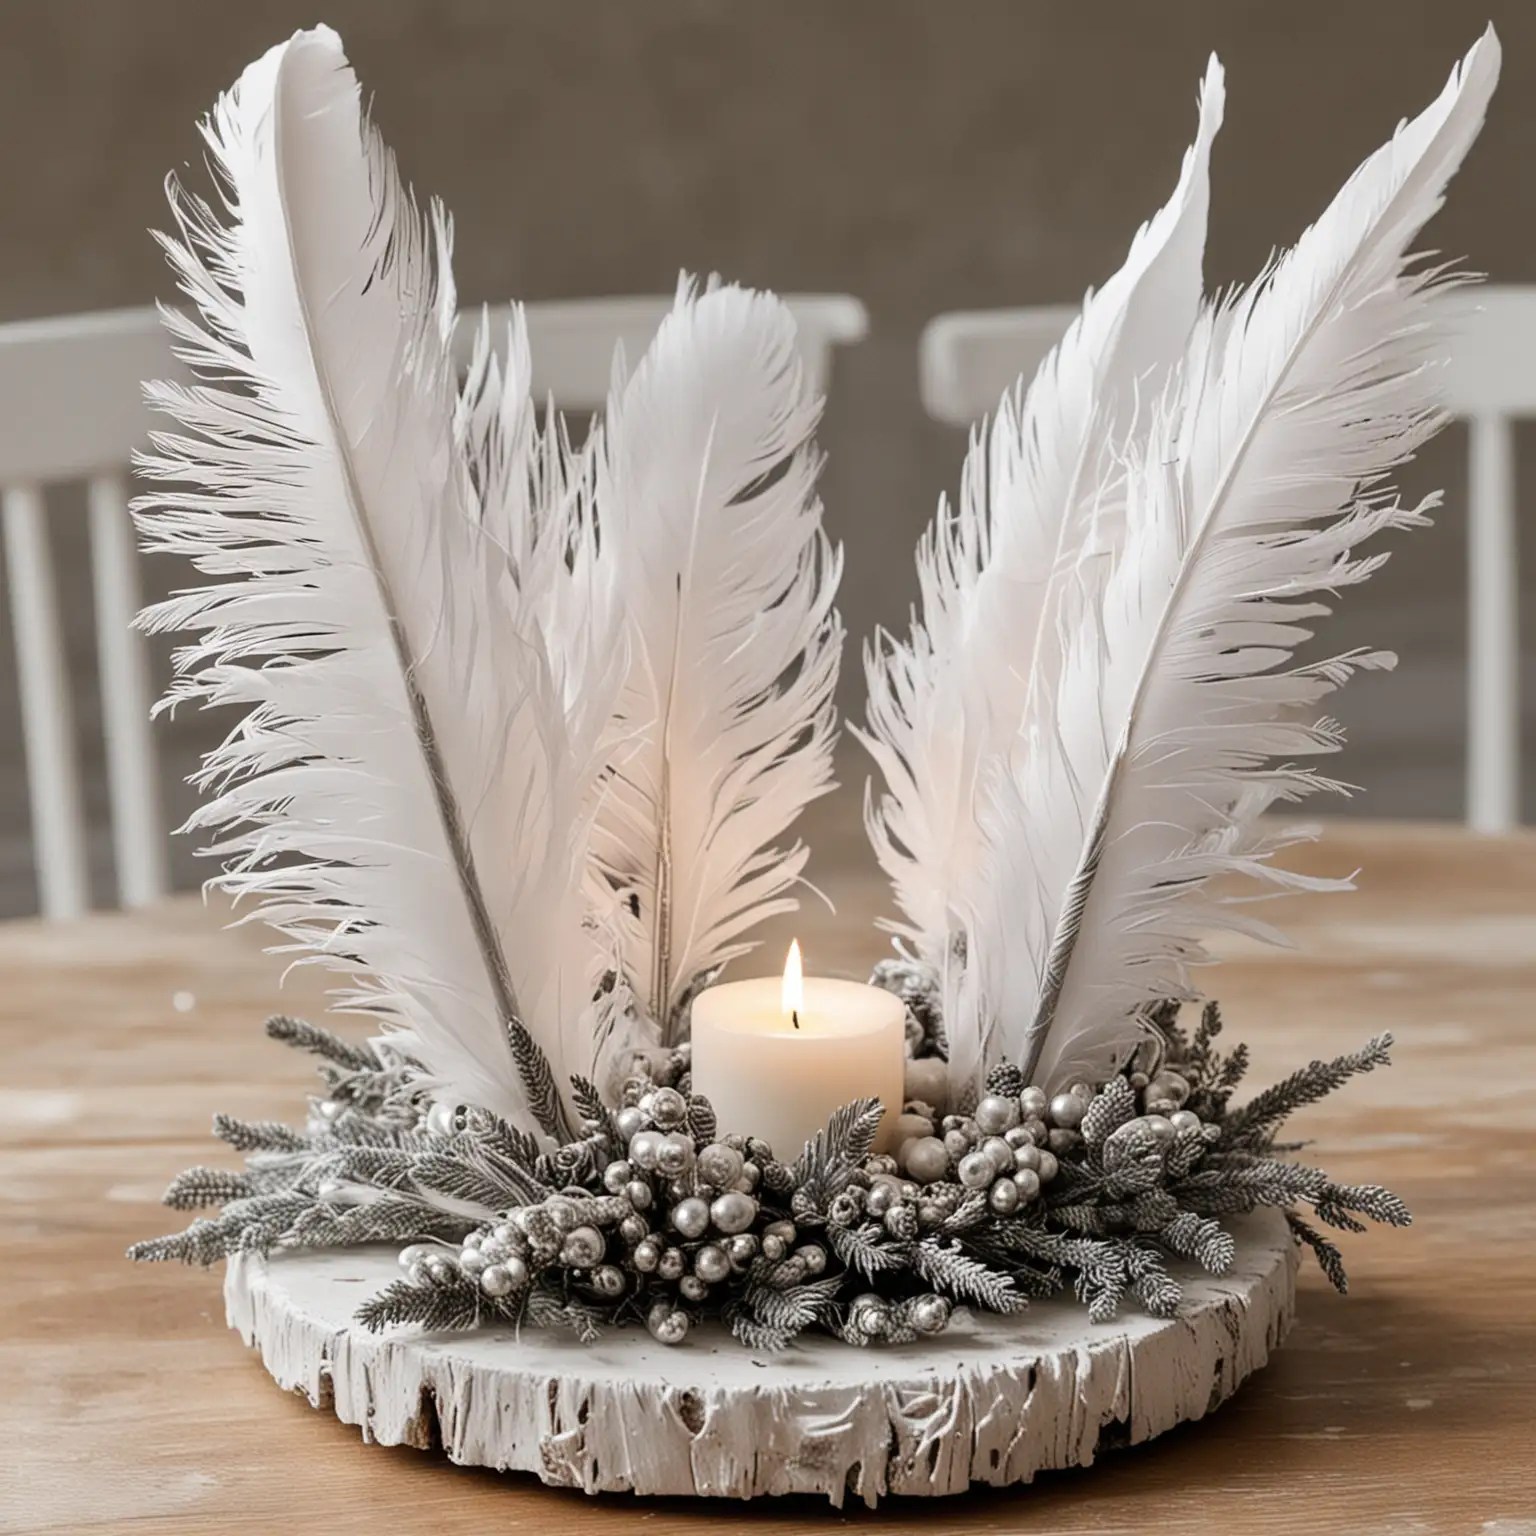 DIY-Boho-Winter-Wedding-Centerpiece-Silver-and-White-Feather-Elegance